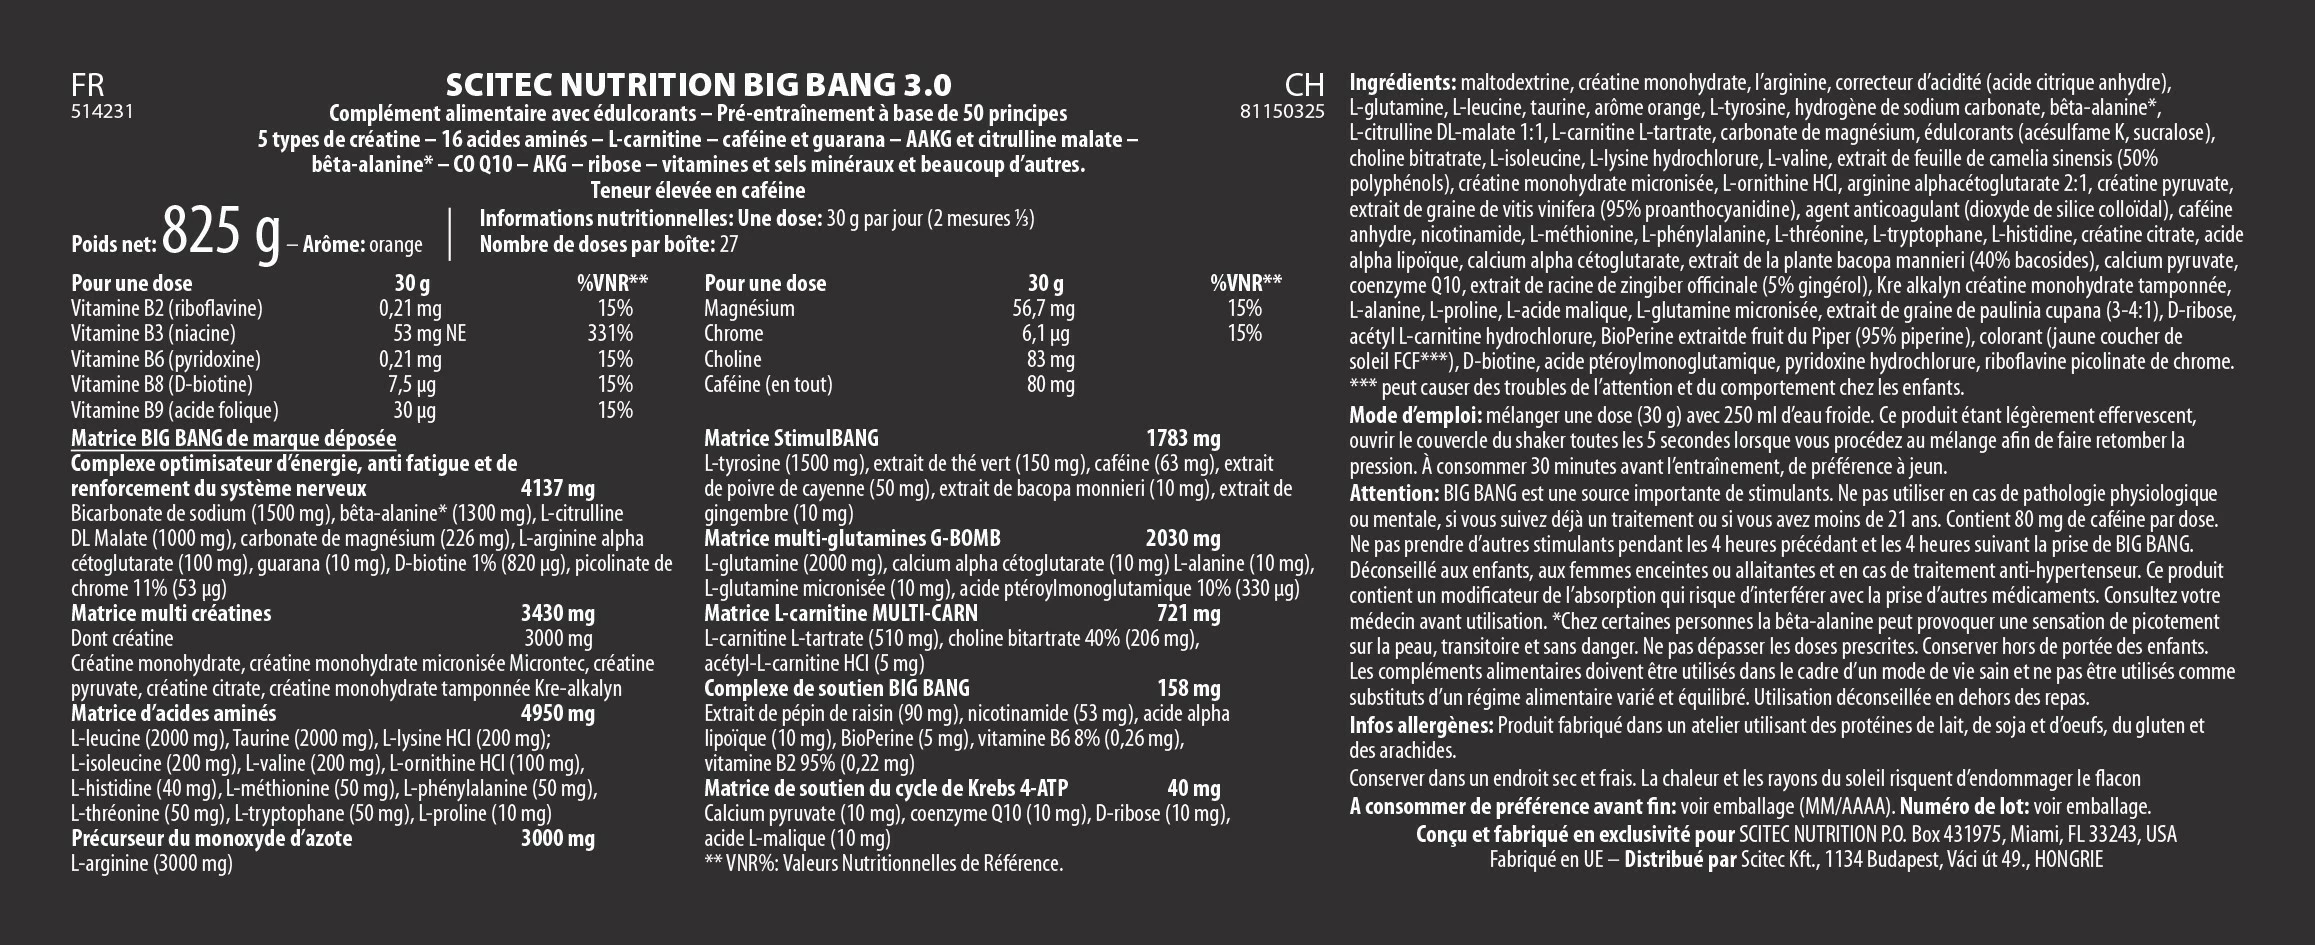 Big Bang 3.0 - nutrifact